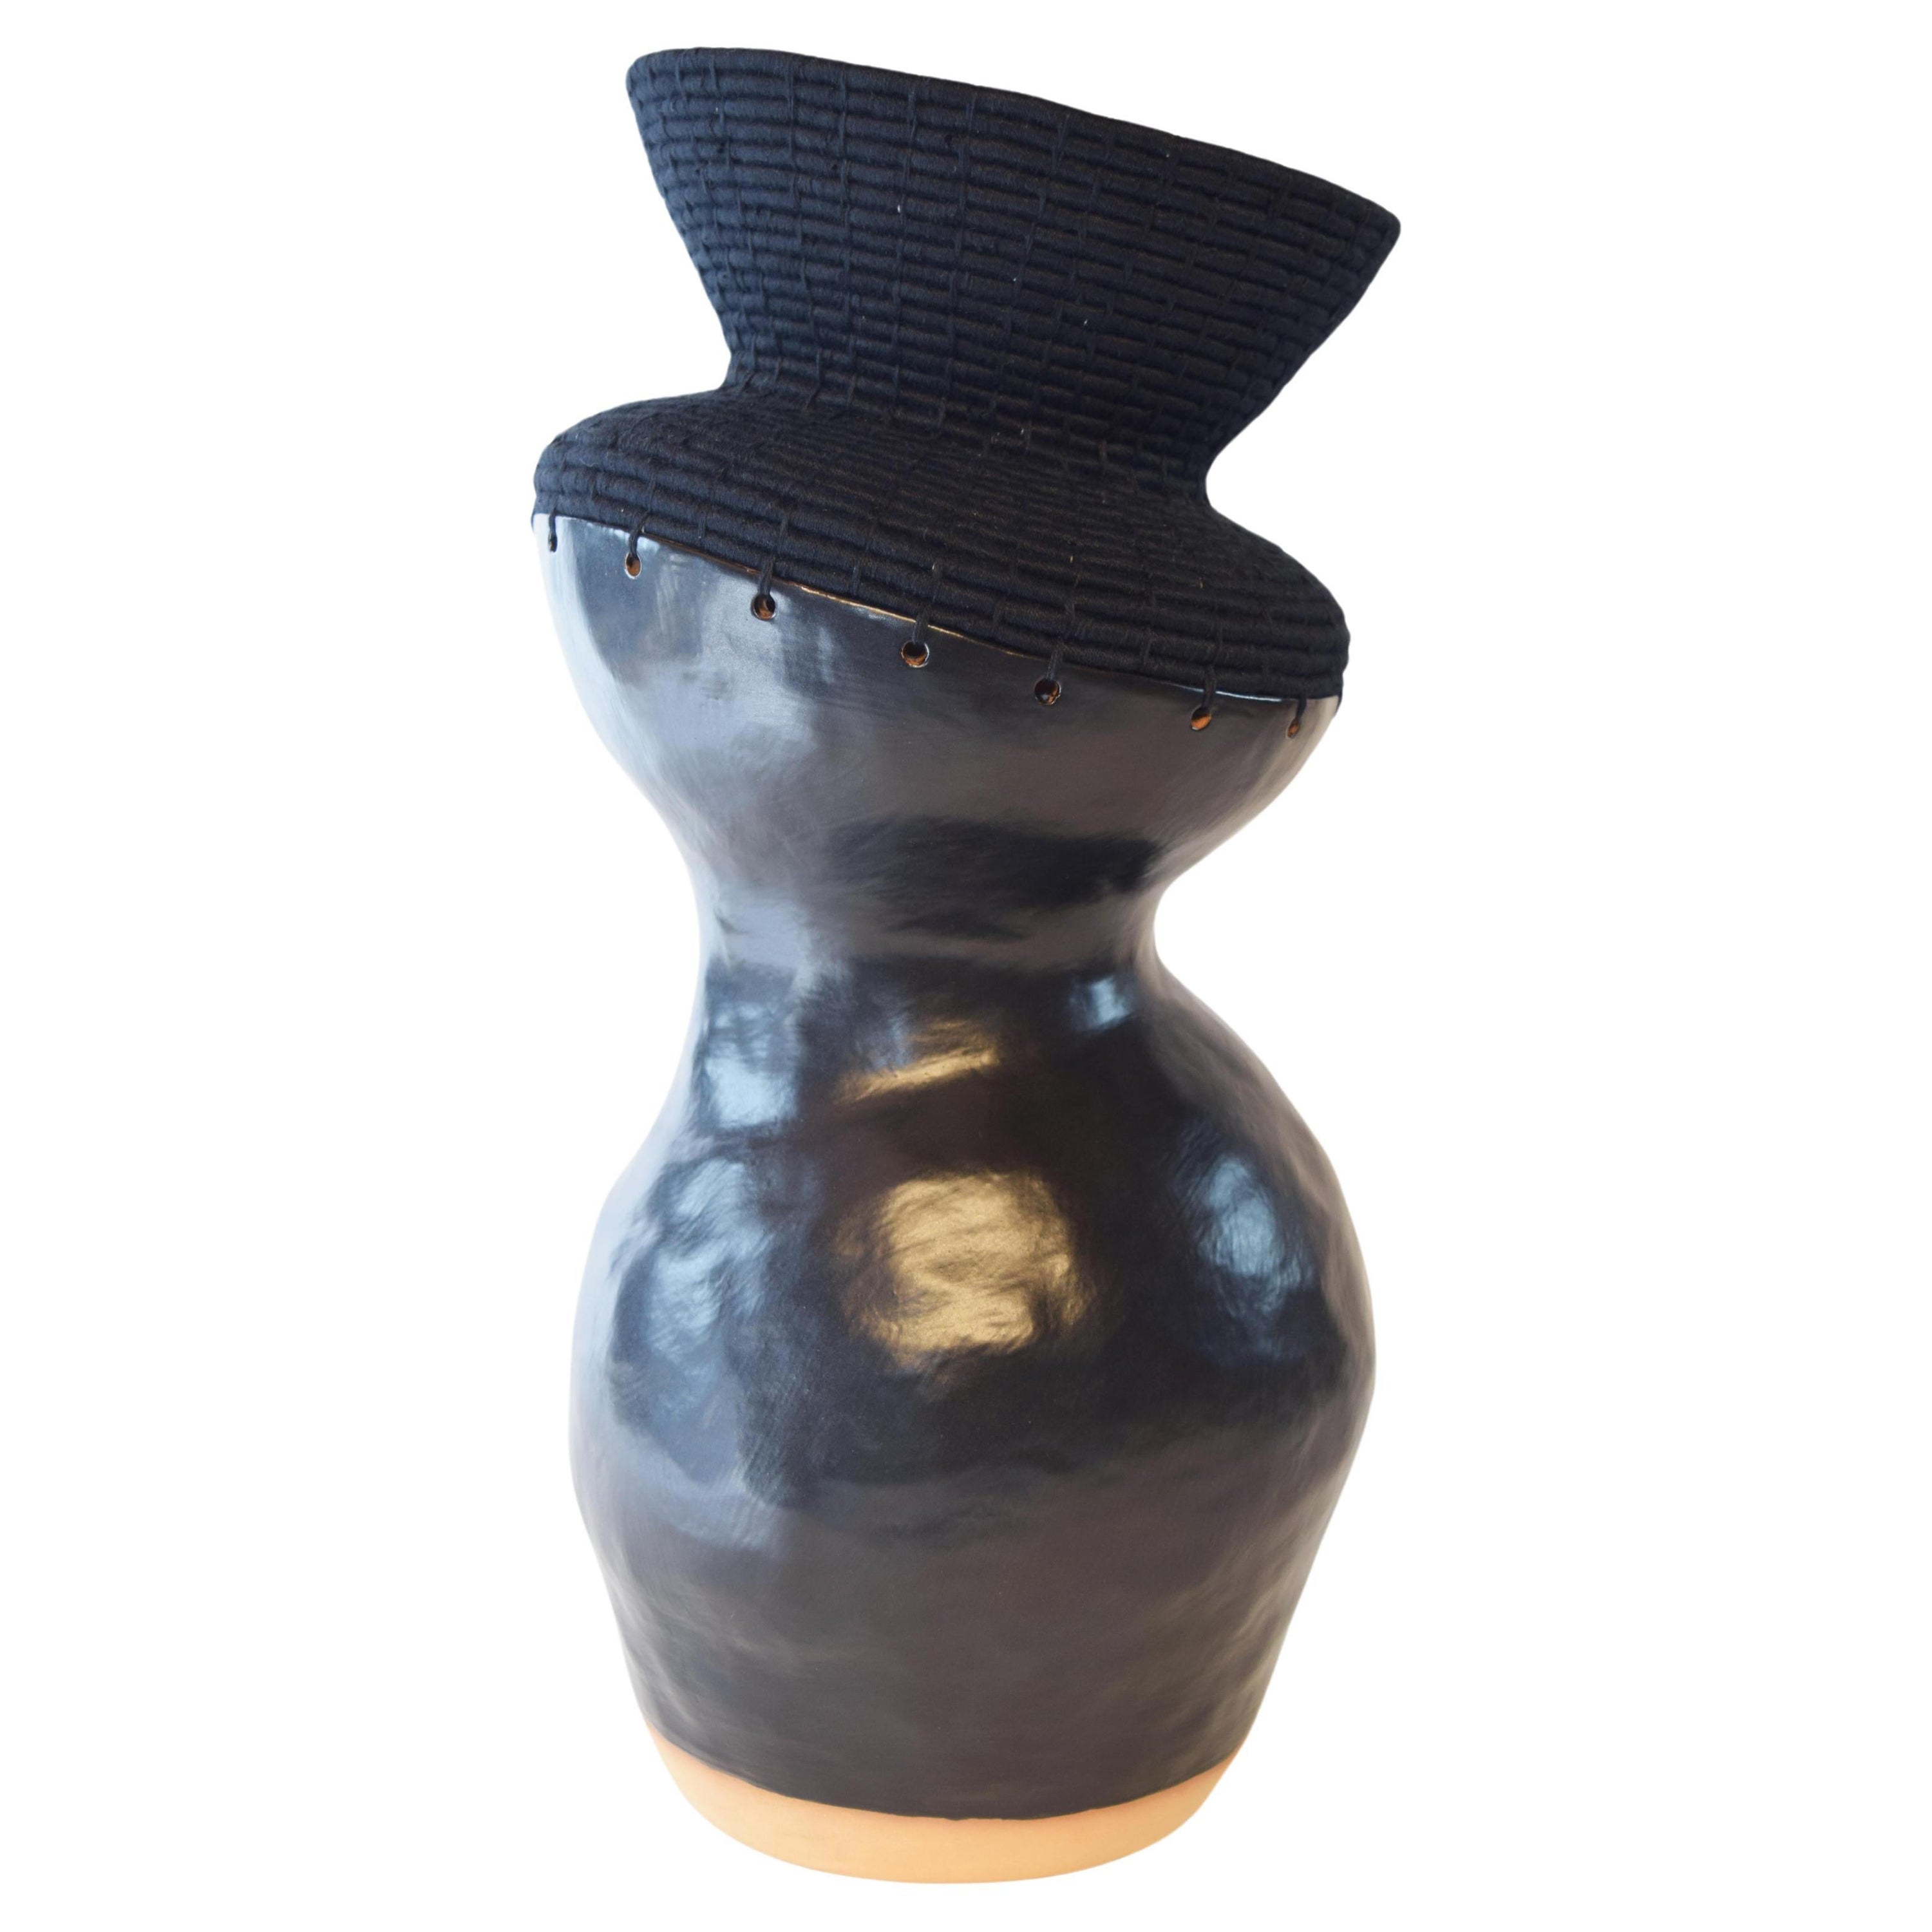 One of a Kind Ceramic & Woven Fiber Vessel #761, Satin Black Glaze, Black Cotton